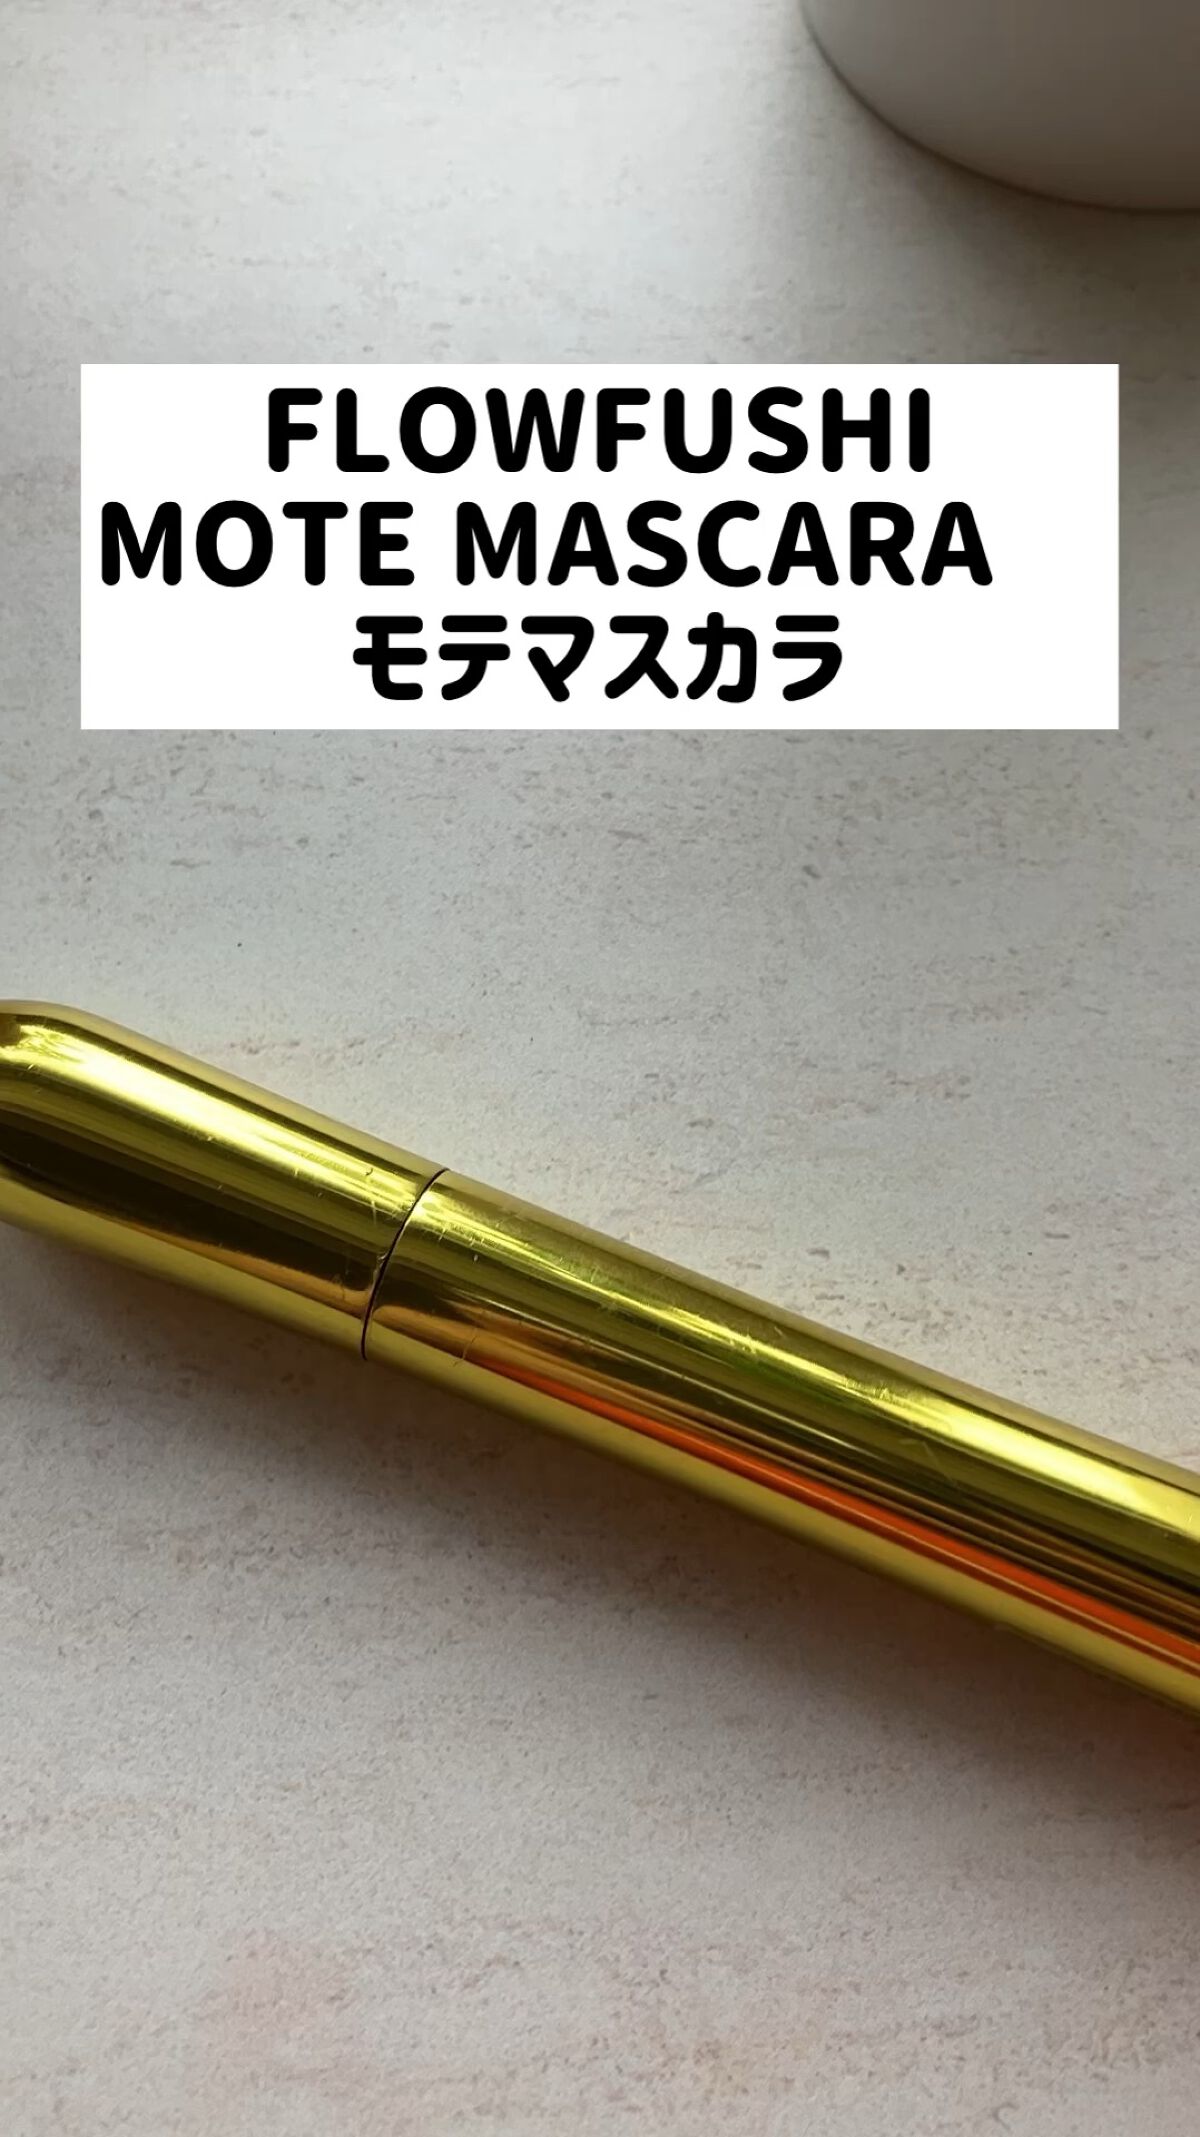 MOTE MASCARA™ (モテマスカラ)/UZU BY FLOWFUSHI/マスカラの動画クチコミ5つ目